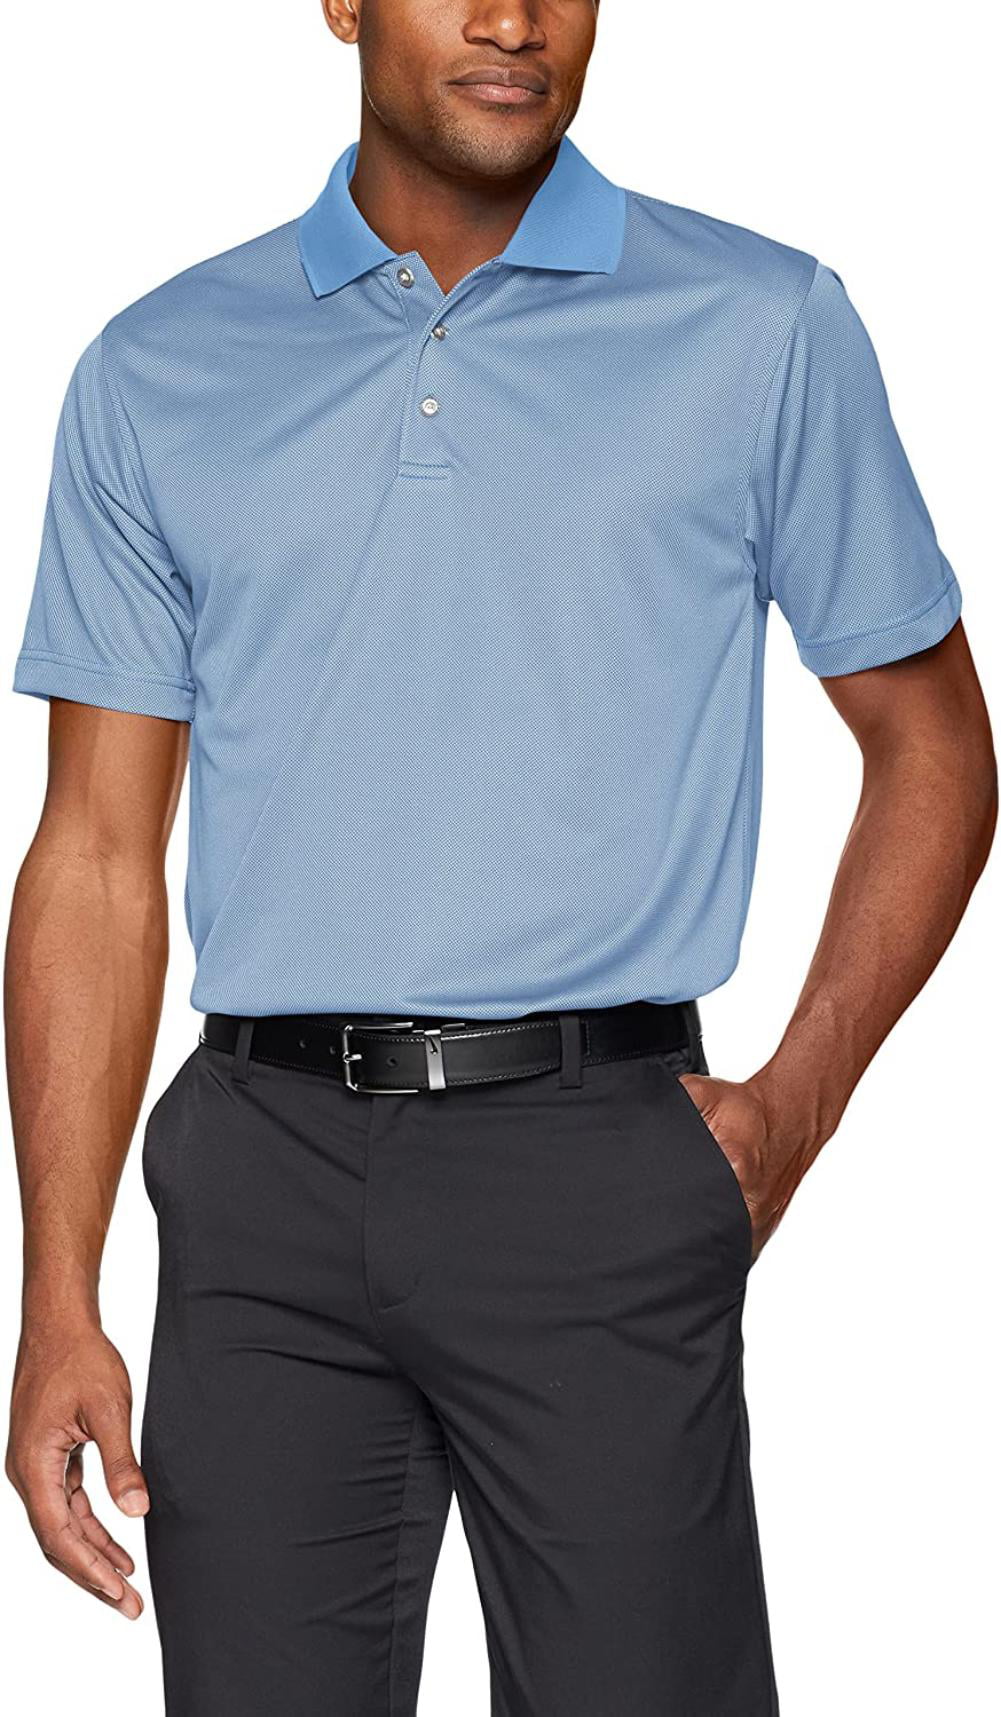 Men's Pebble Beach Navy Blue Stripe Short Sleeve Quick Dry Polo Shirt Sz Medium 